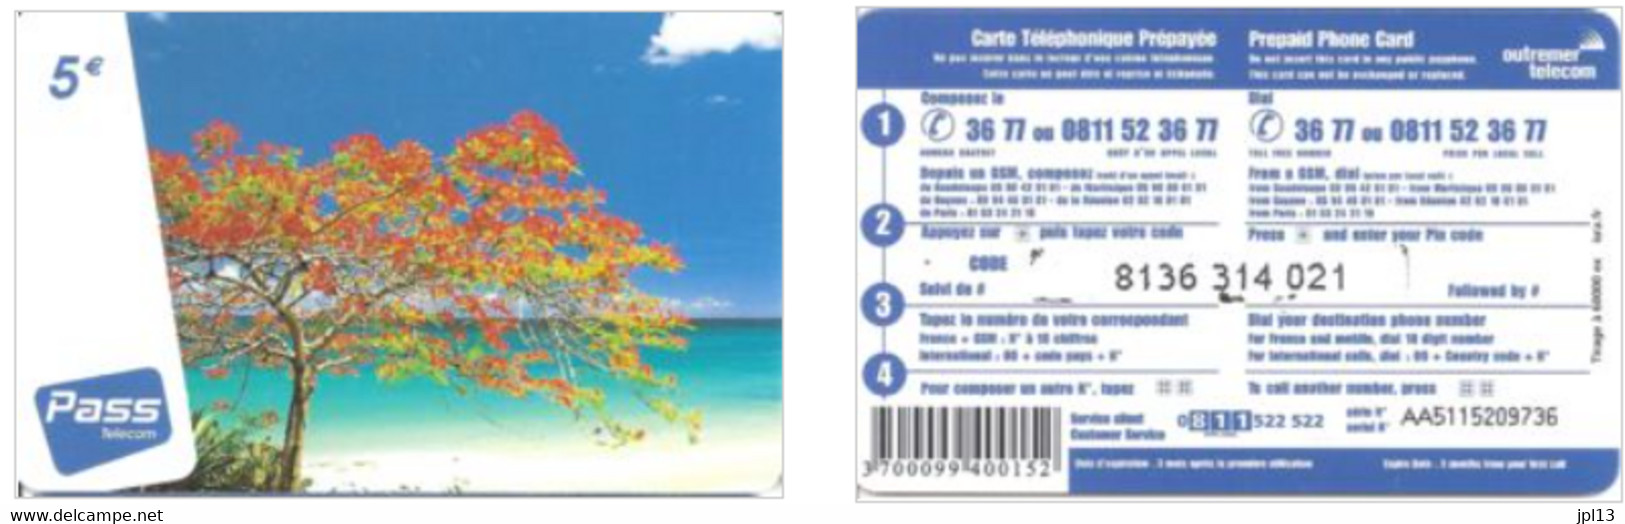 Carte Prépayée Outremer Telecom 5€ Flamboyant (Pass Telecom), Tirage 60.000 Ex., Série AA5115xxxxxx - Antillas (Francesas)